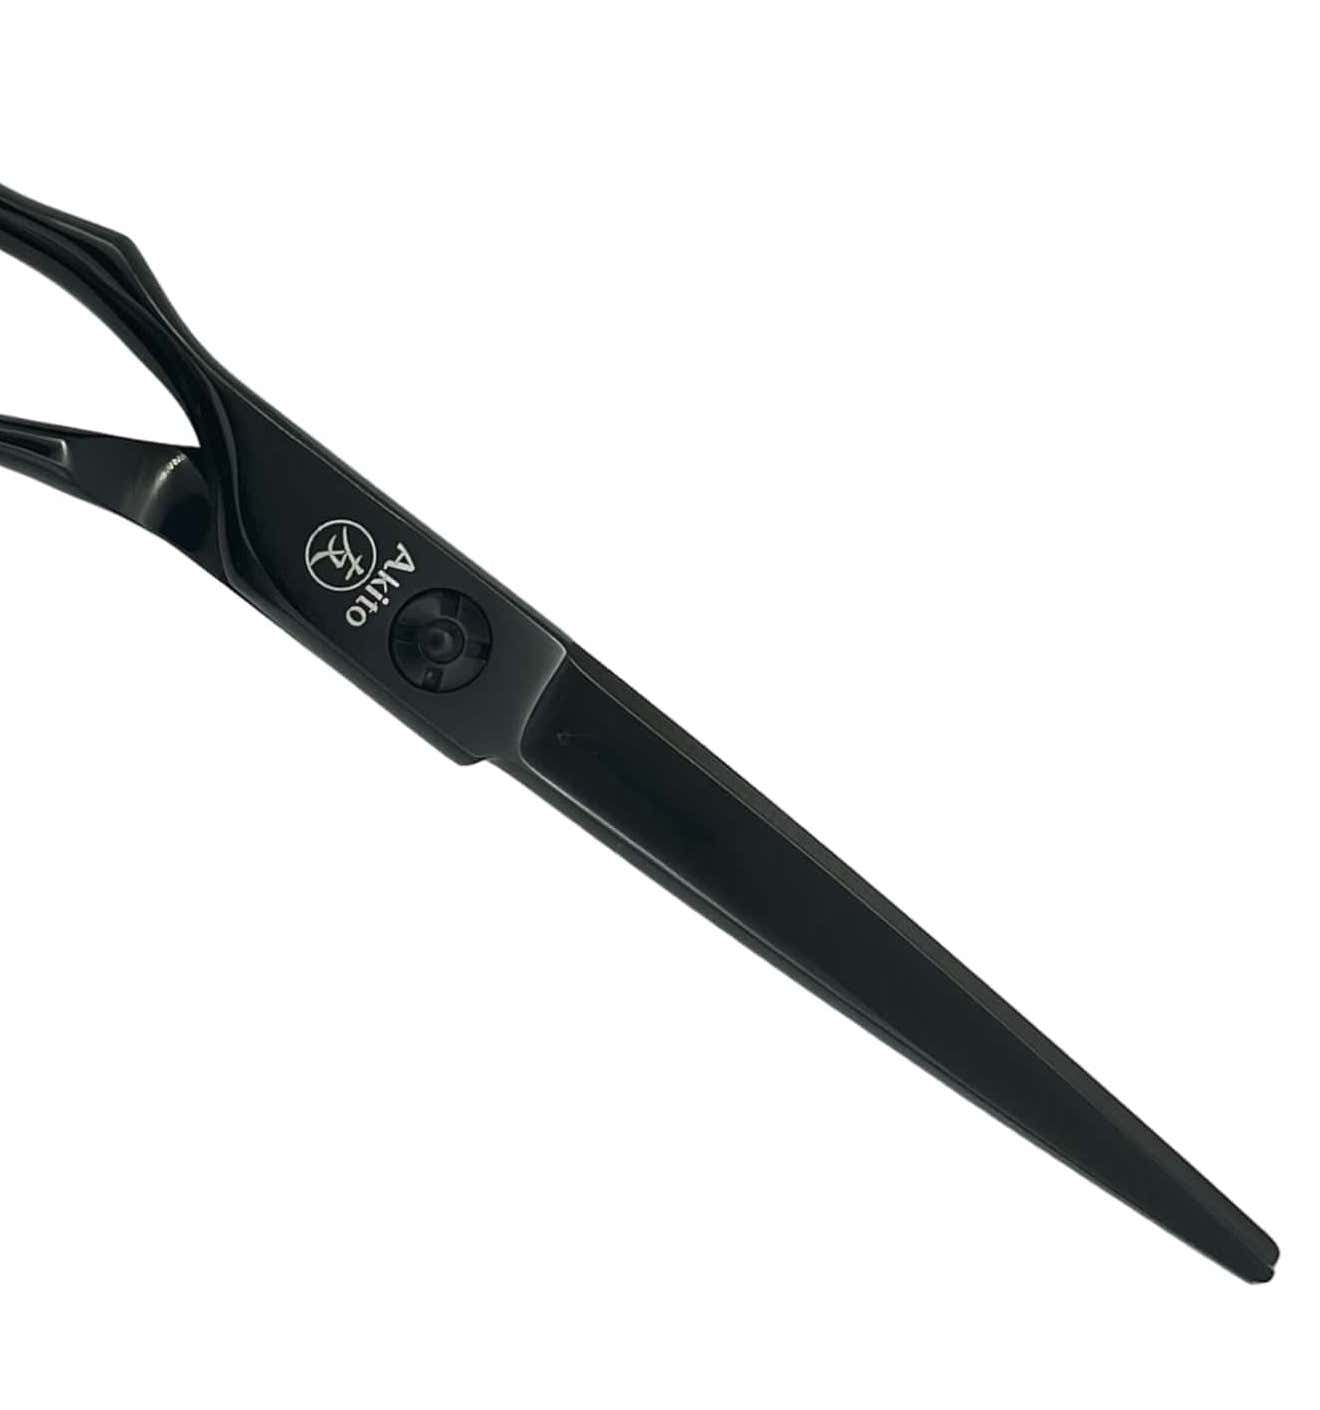 Fuji Scissors DXGF SIZE 7 - 7,5 inches – Japanese Hair Scissors - shears